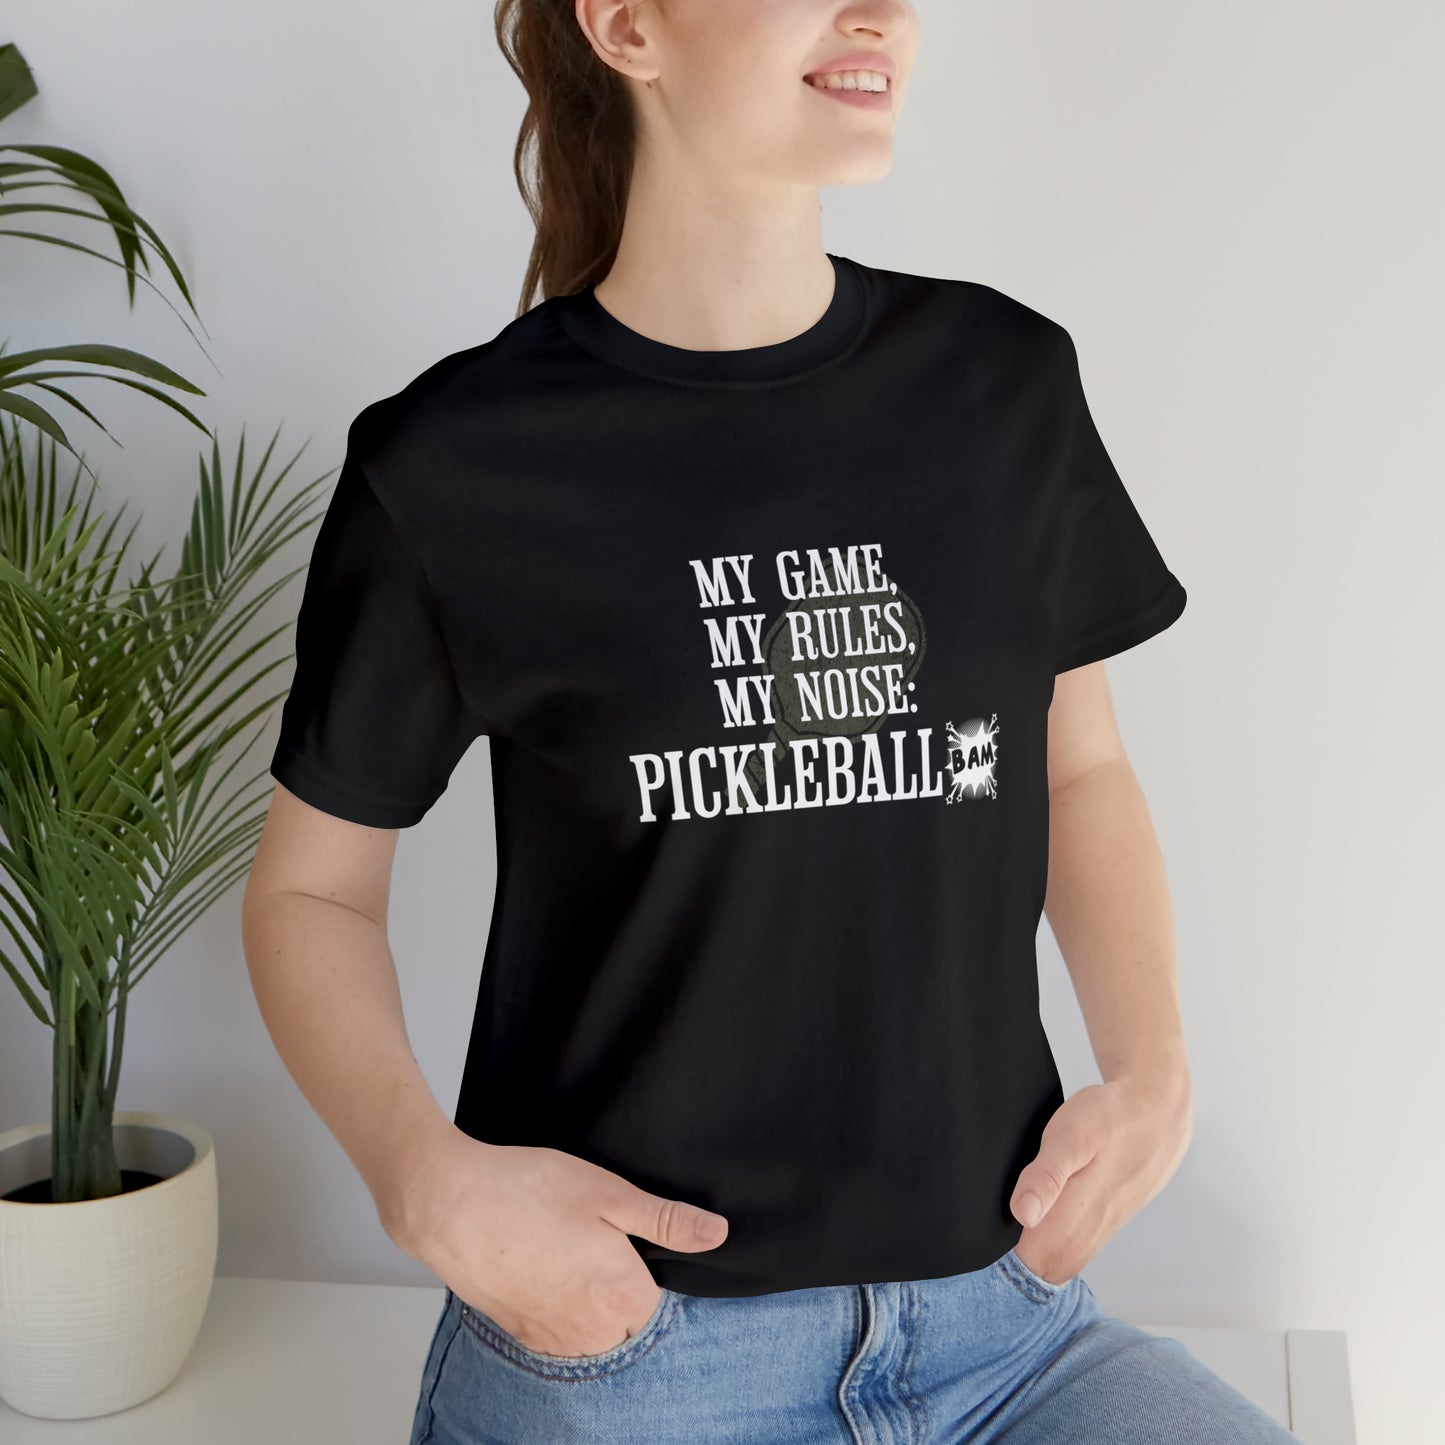 Assertive Pickleball T-Shirt: My Noise